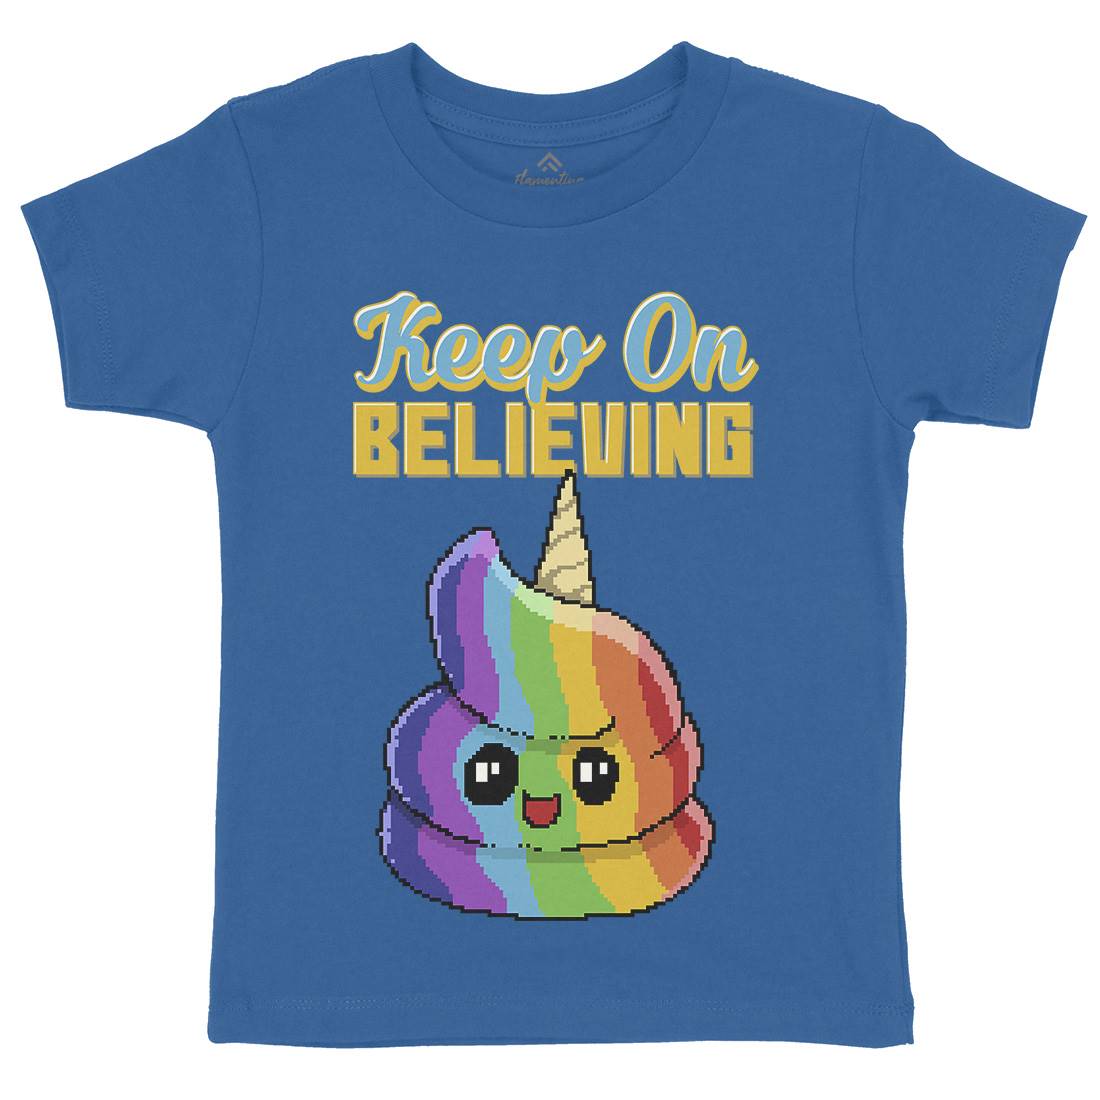 Keep On Believing Kids Crew Neck T-Shirt Retro B921